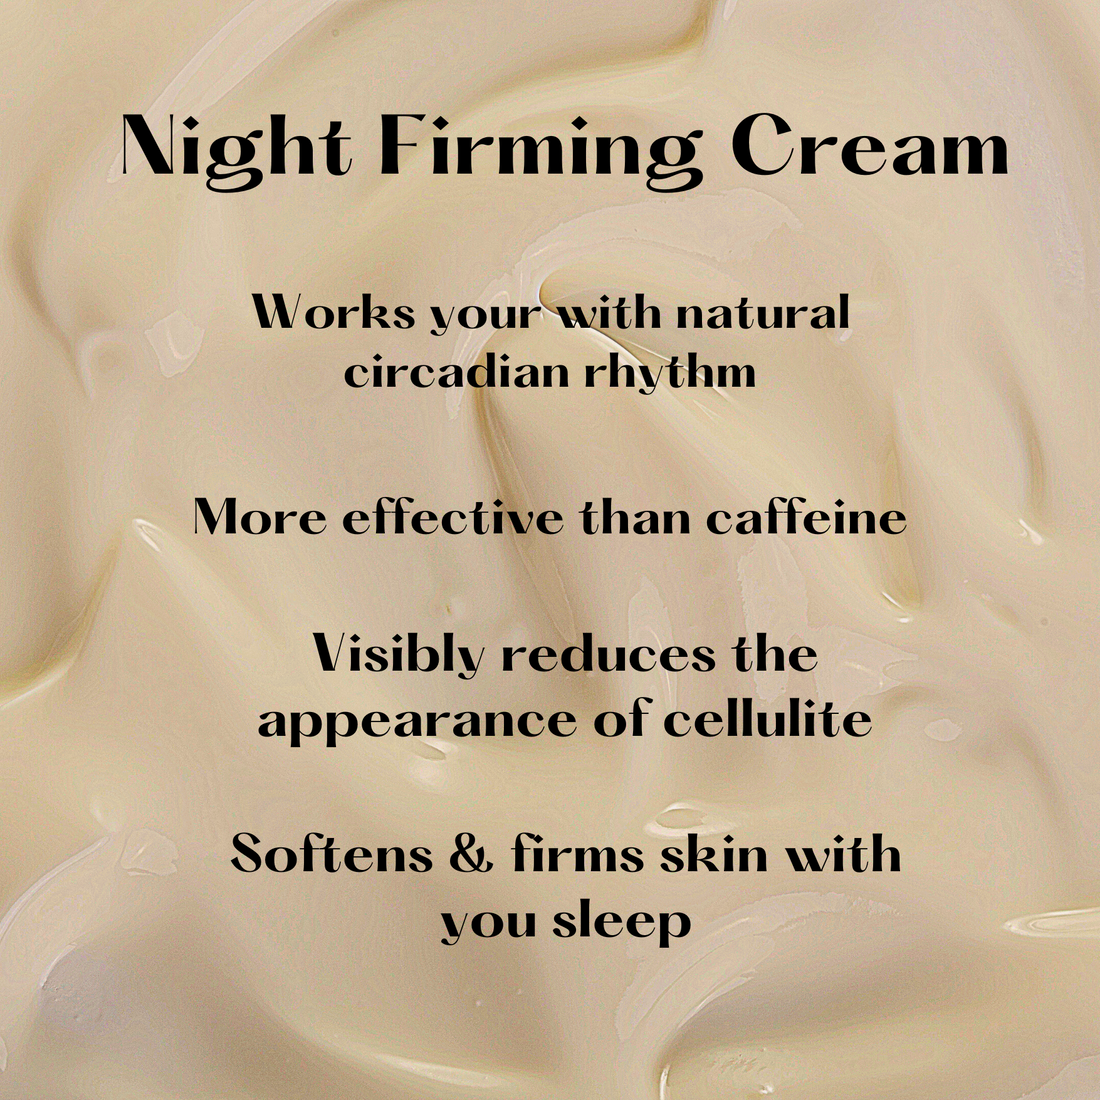 Firming Night Cream